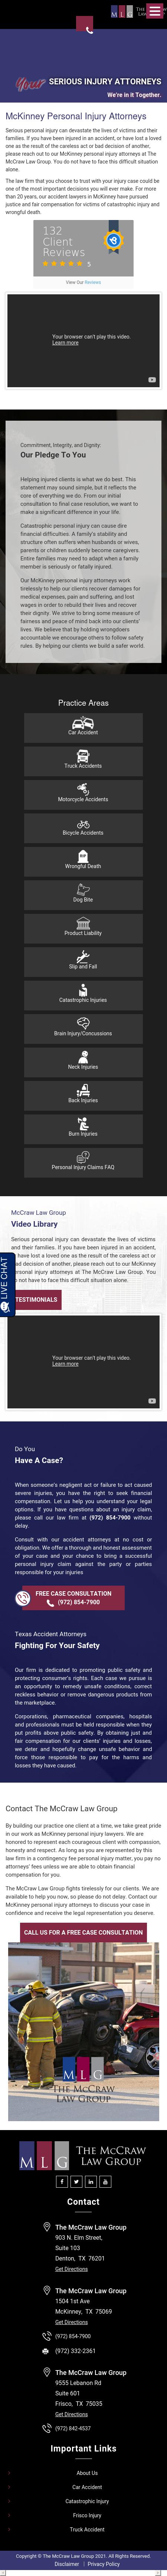 The McCraw Law Group - McKinney TX Lawyers